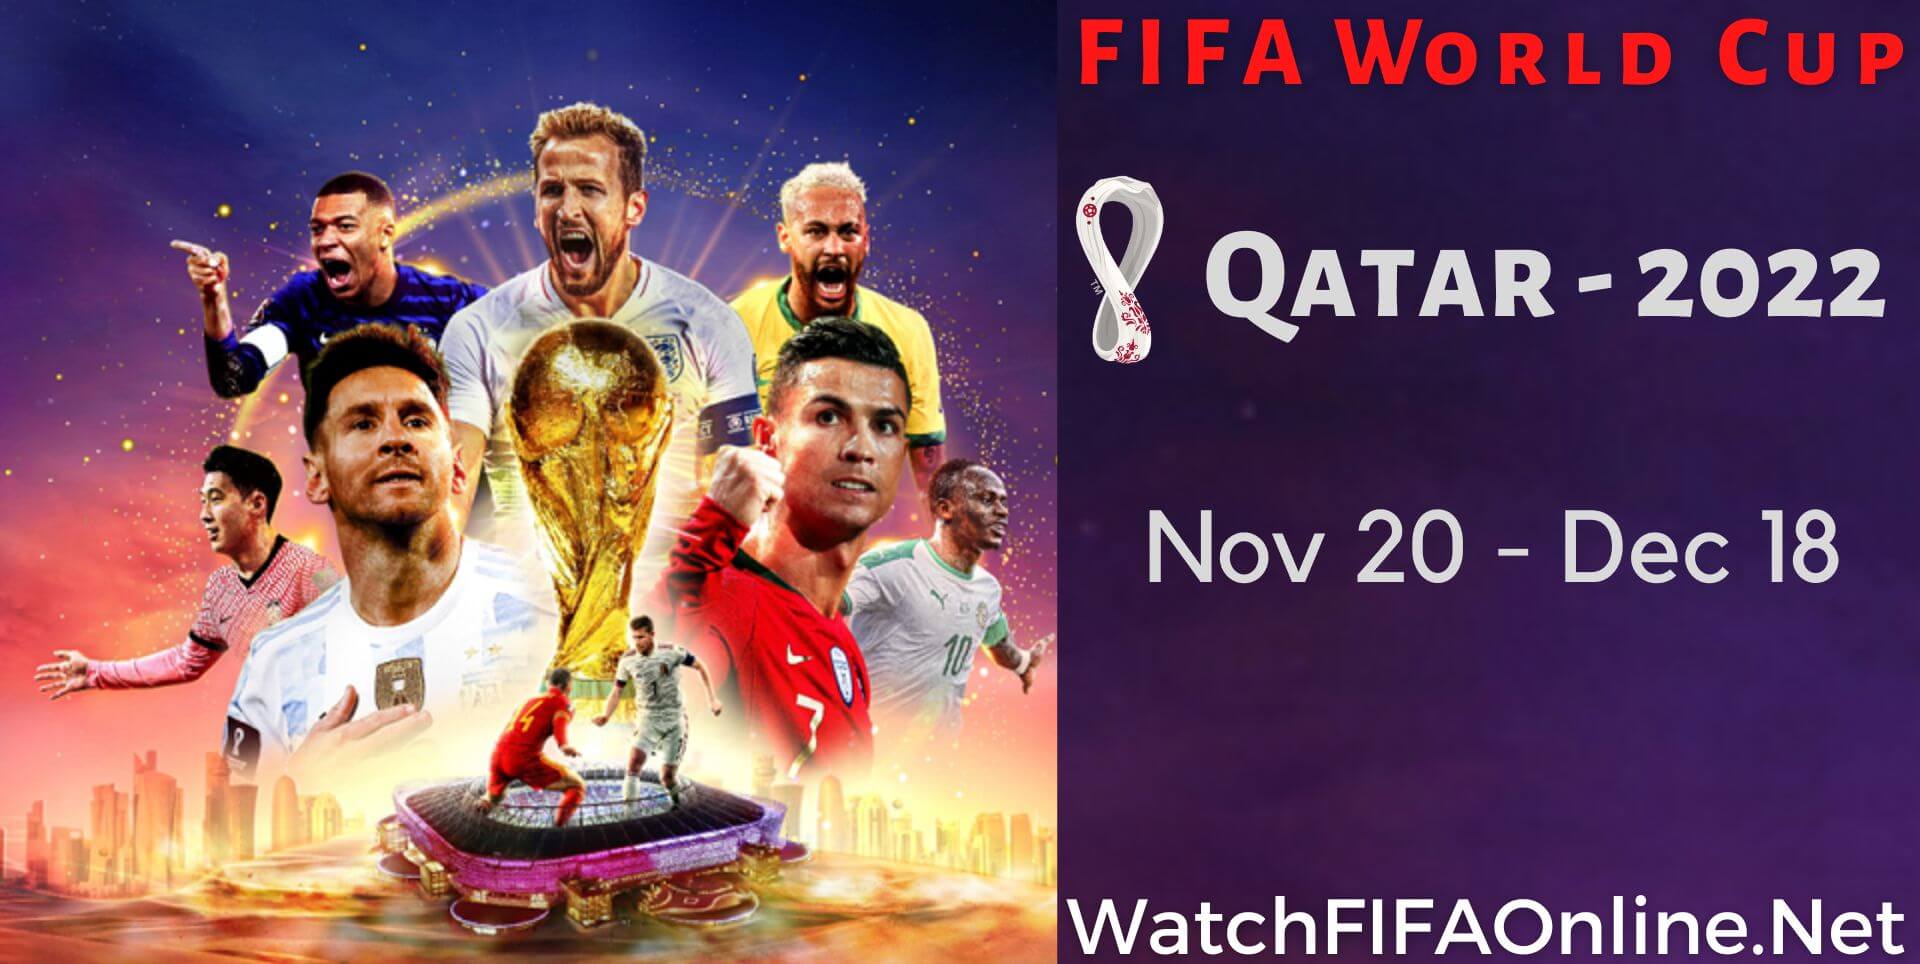 Live Stream of the FIFA World Cup Qatar